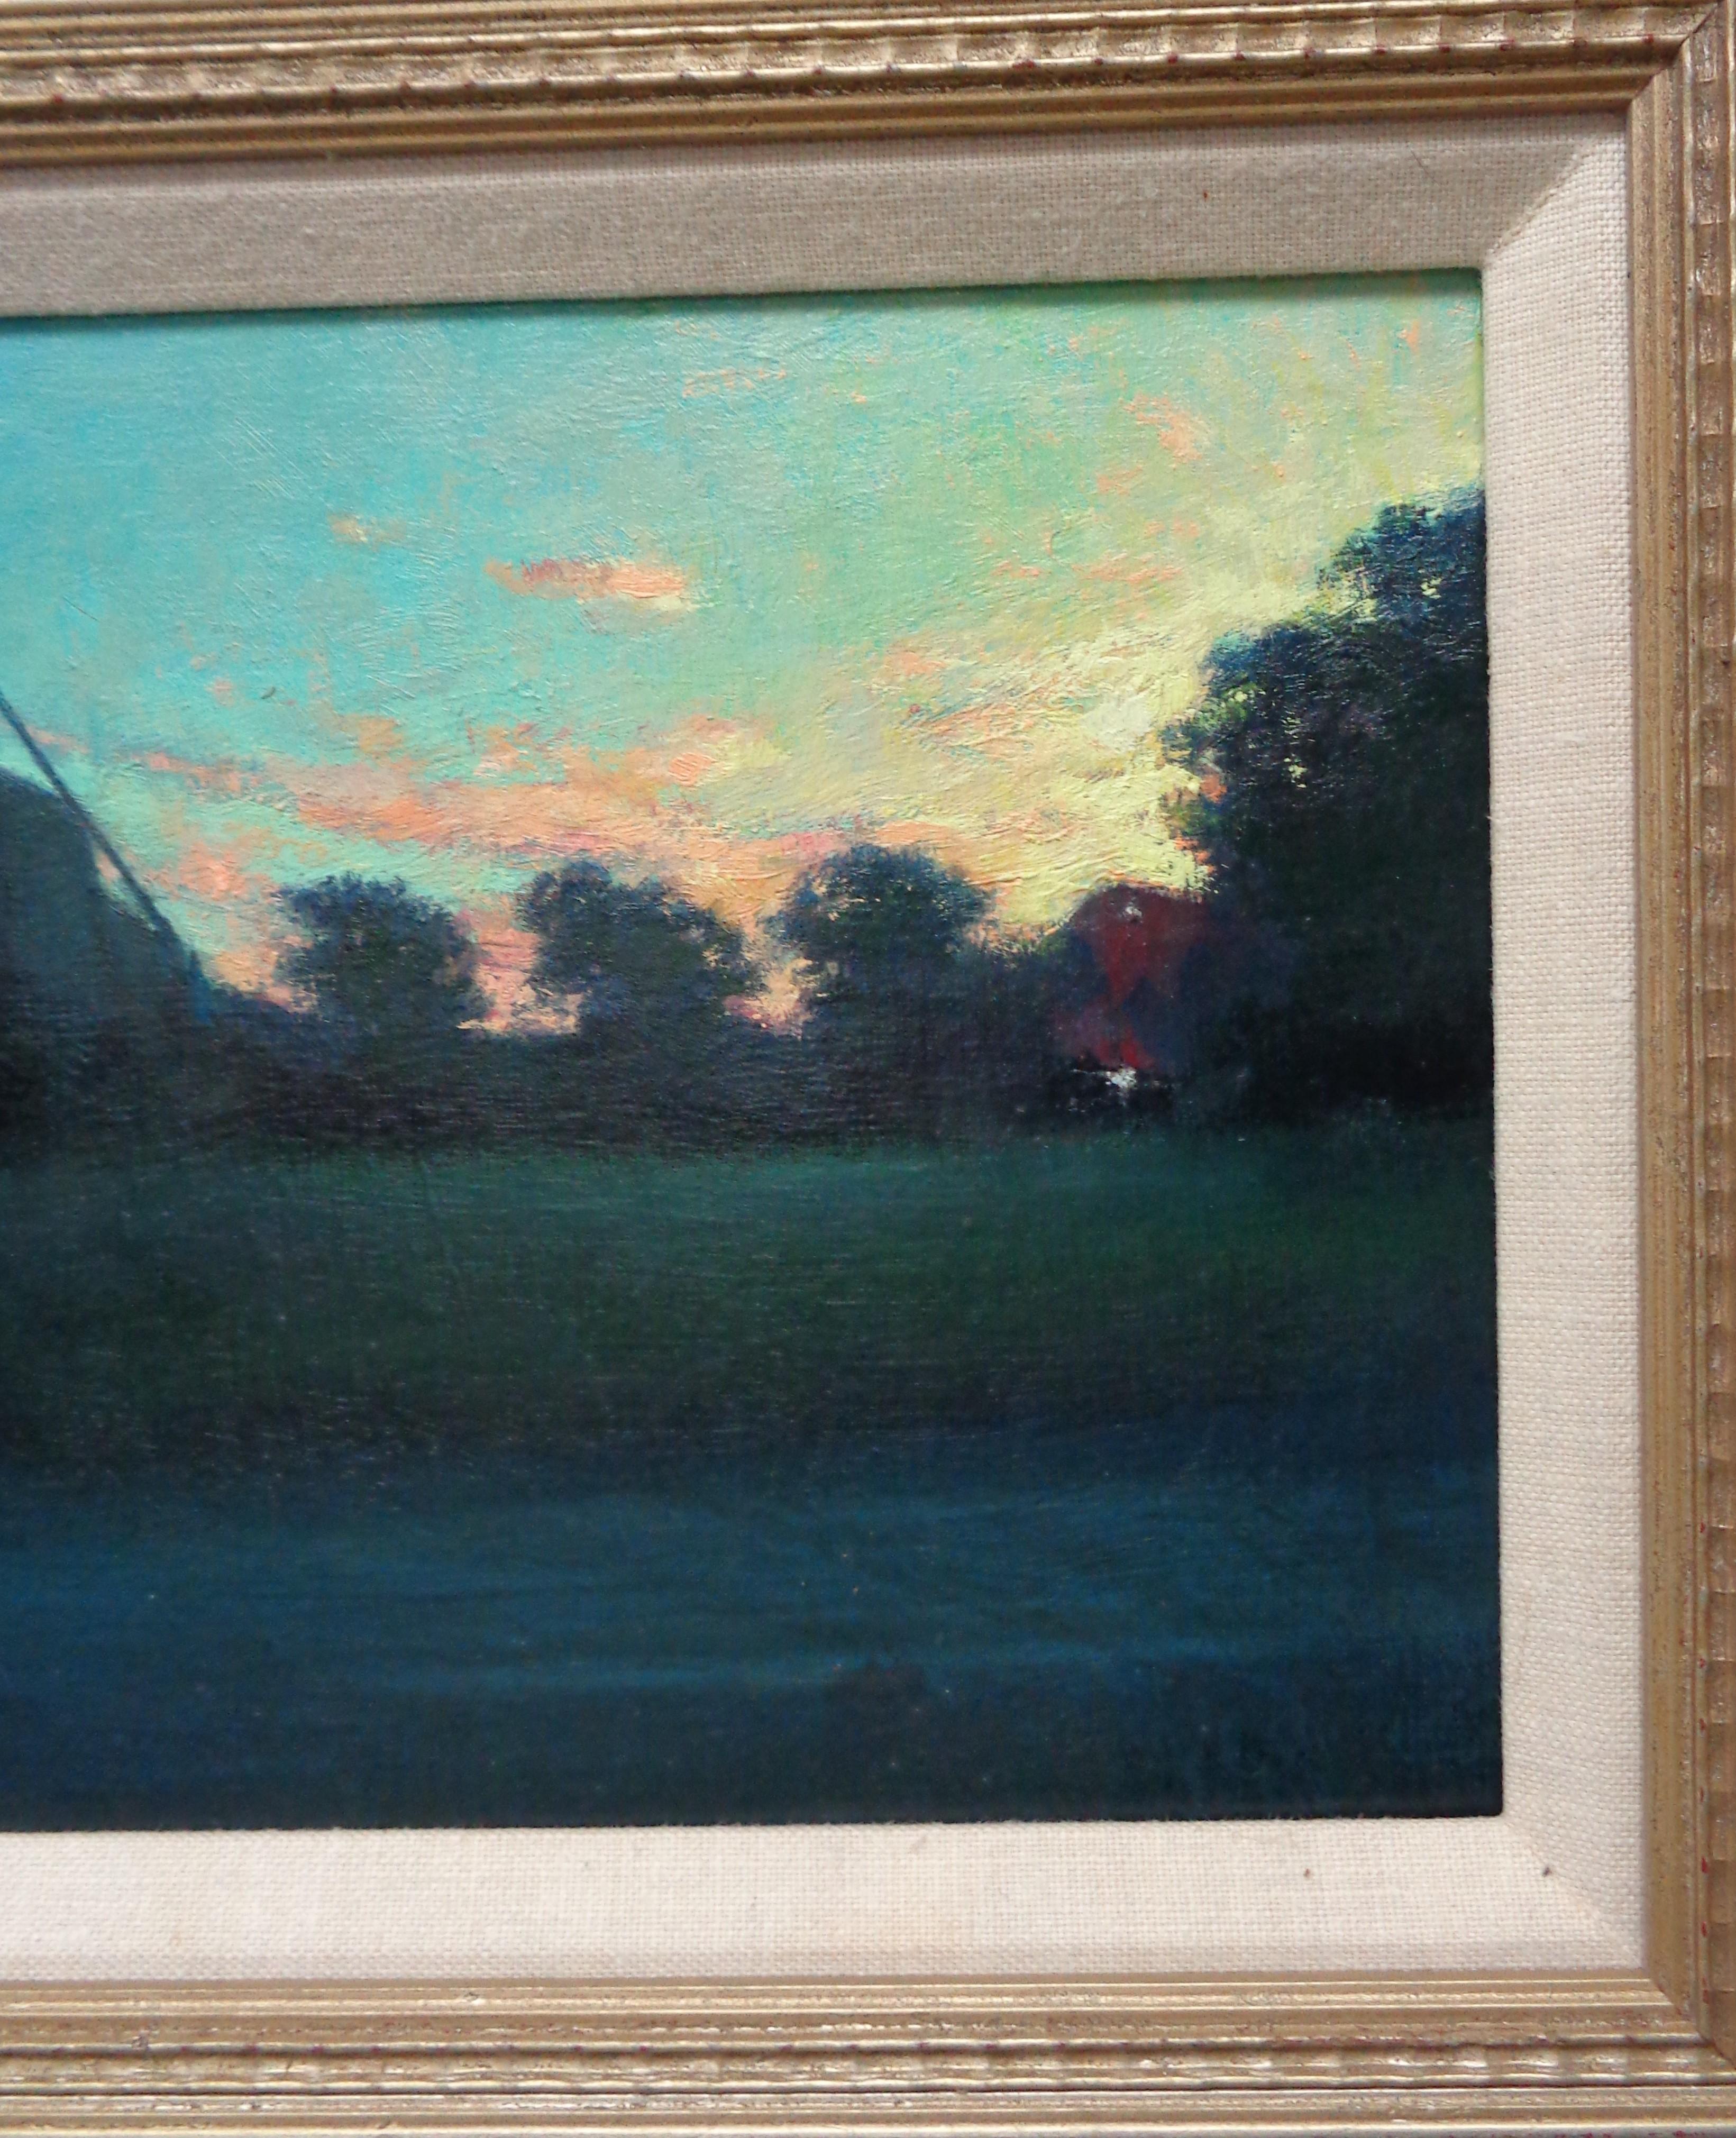  Impressionistic Contemporary Landscape Painting Michael Budden Evening Farm 2